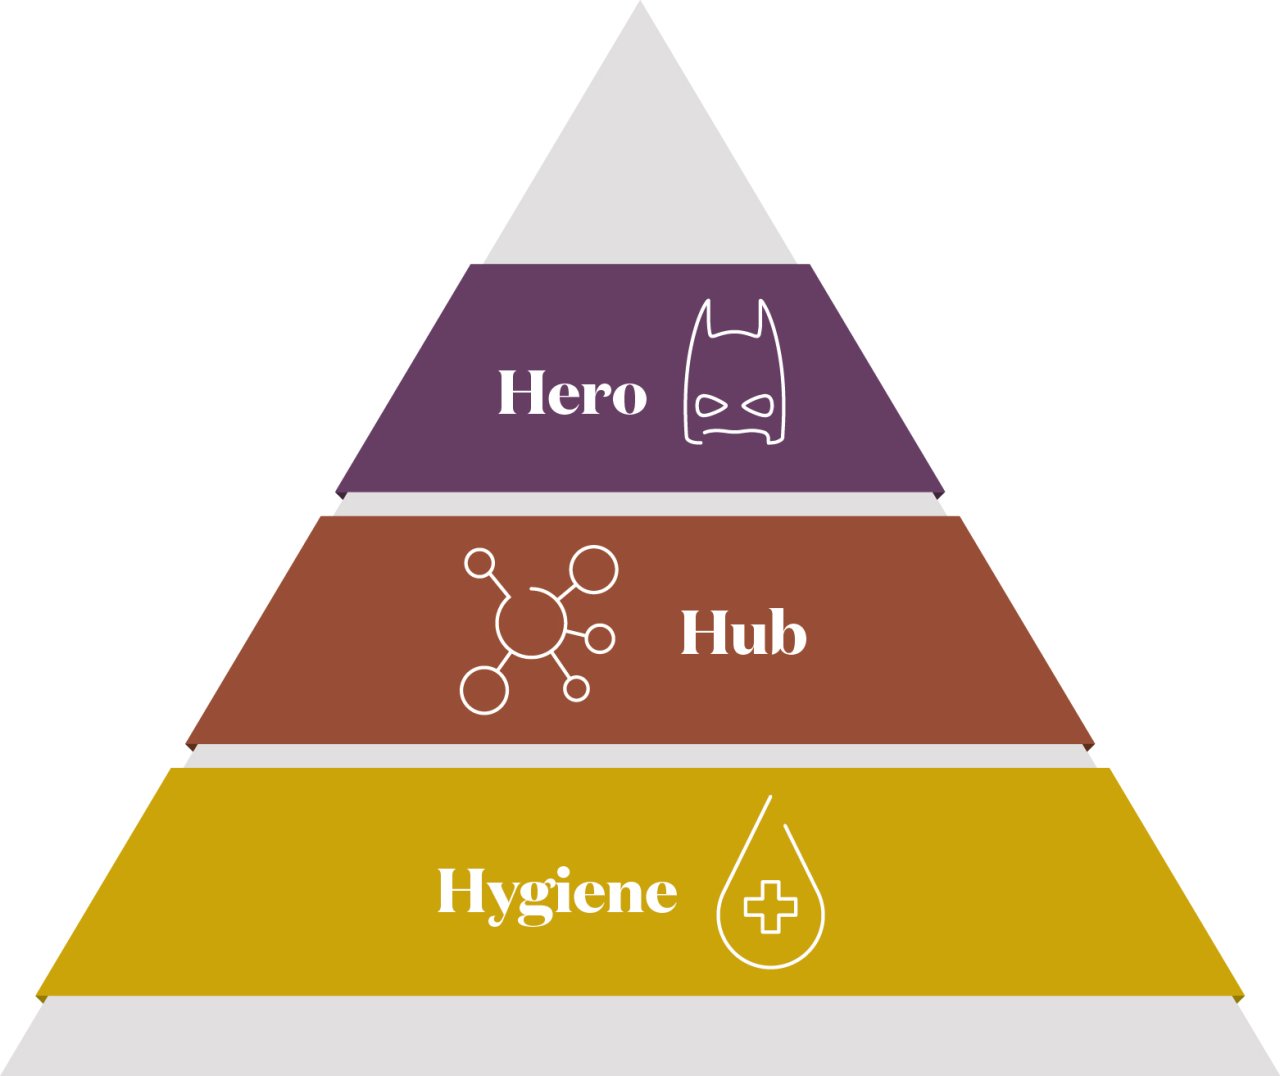 Hero-Hub-Hygiene Modell als Grafik.